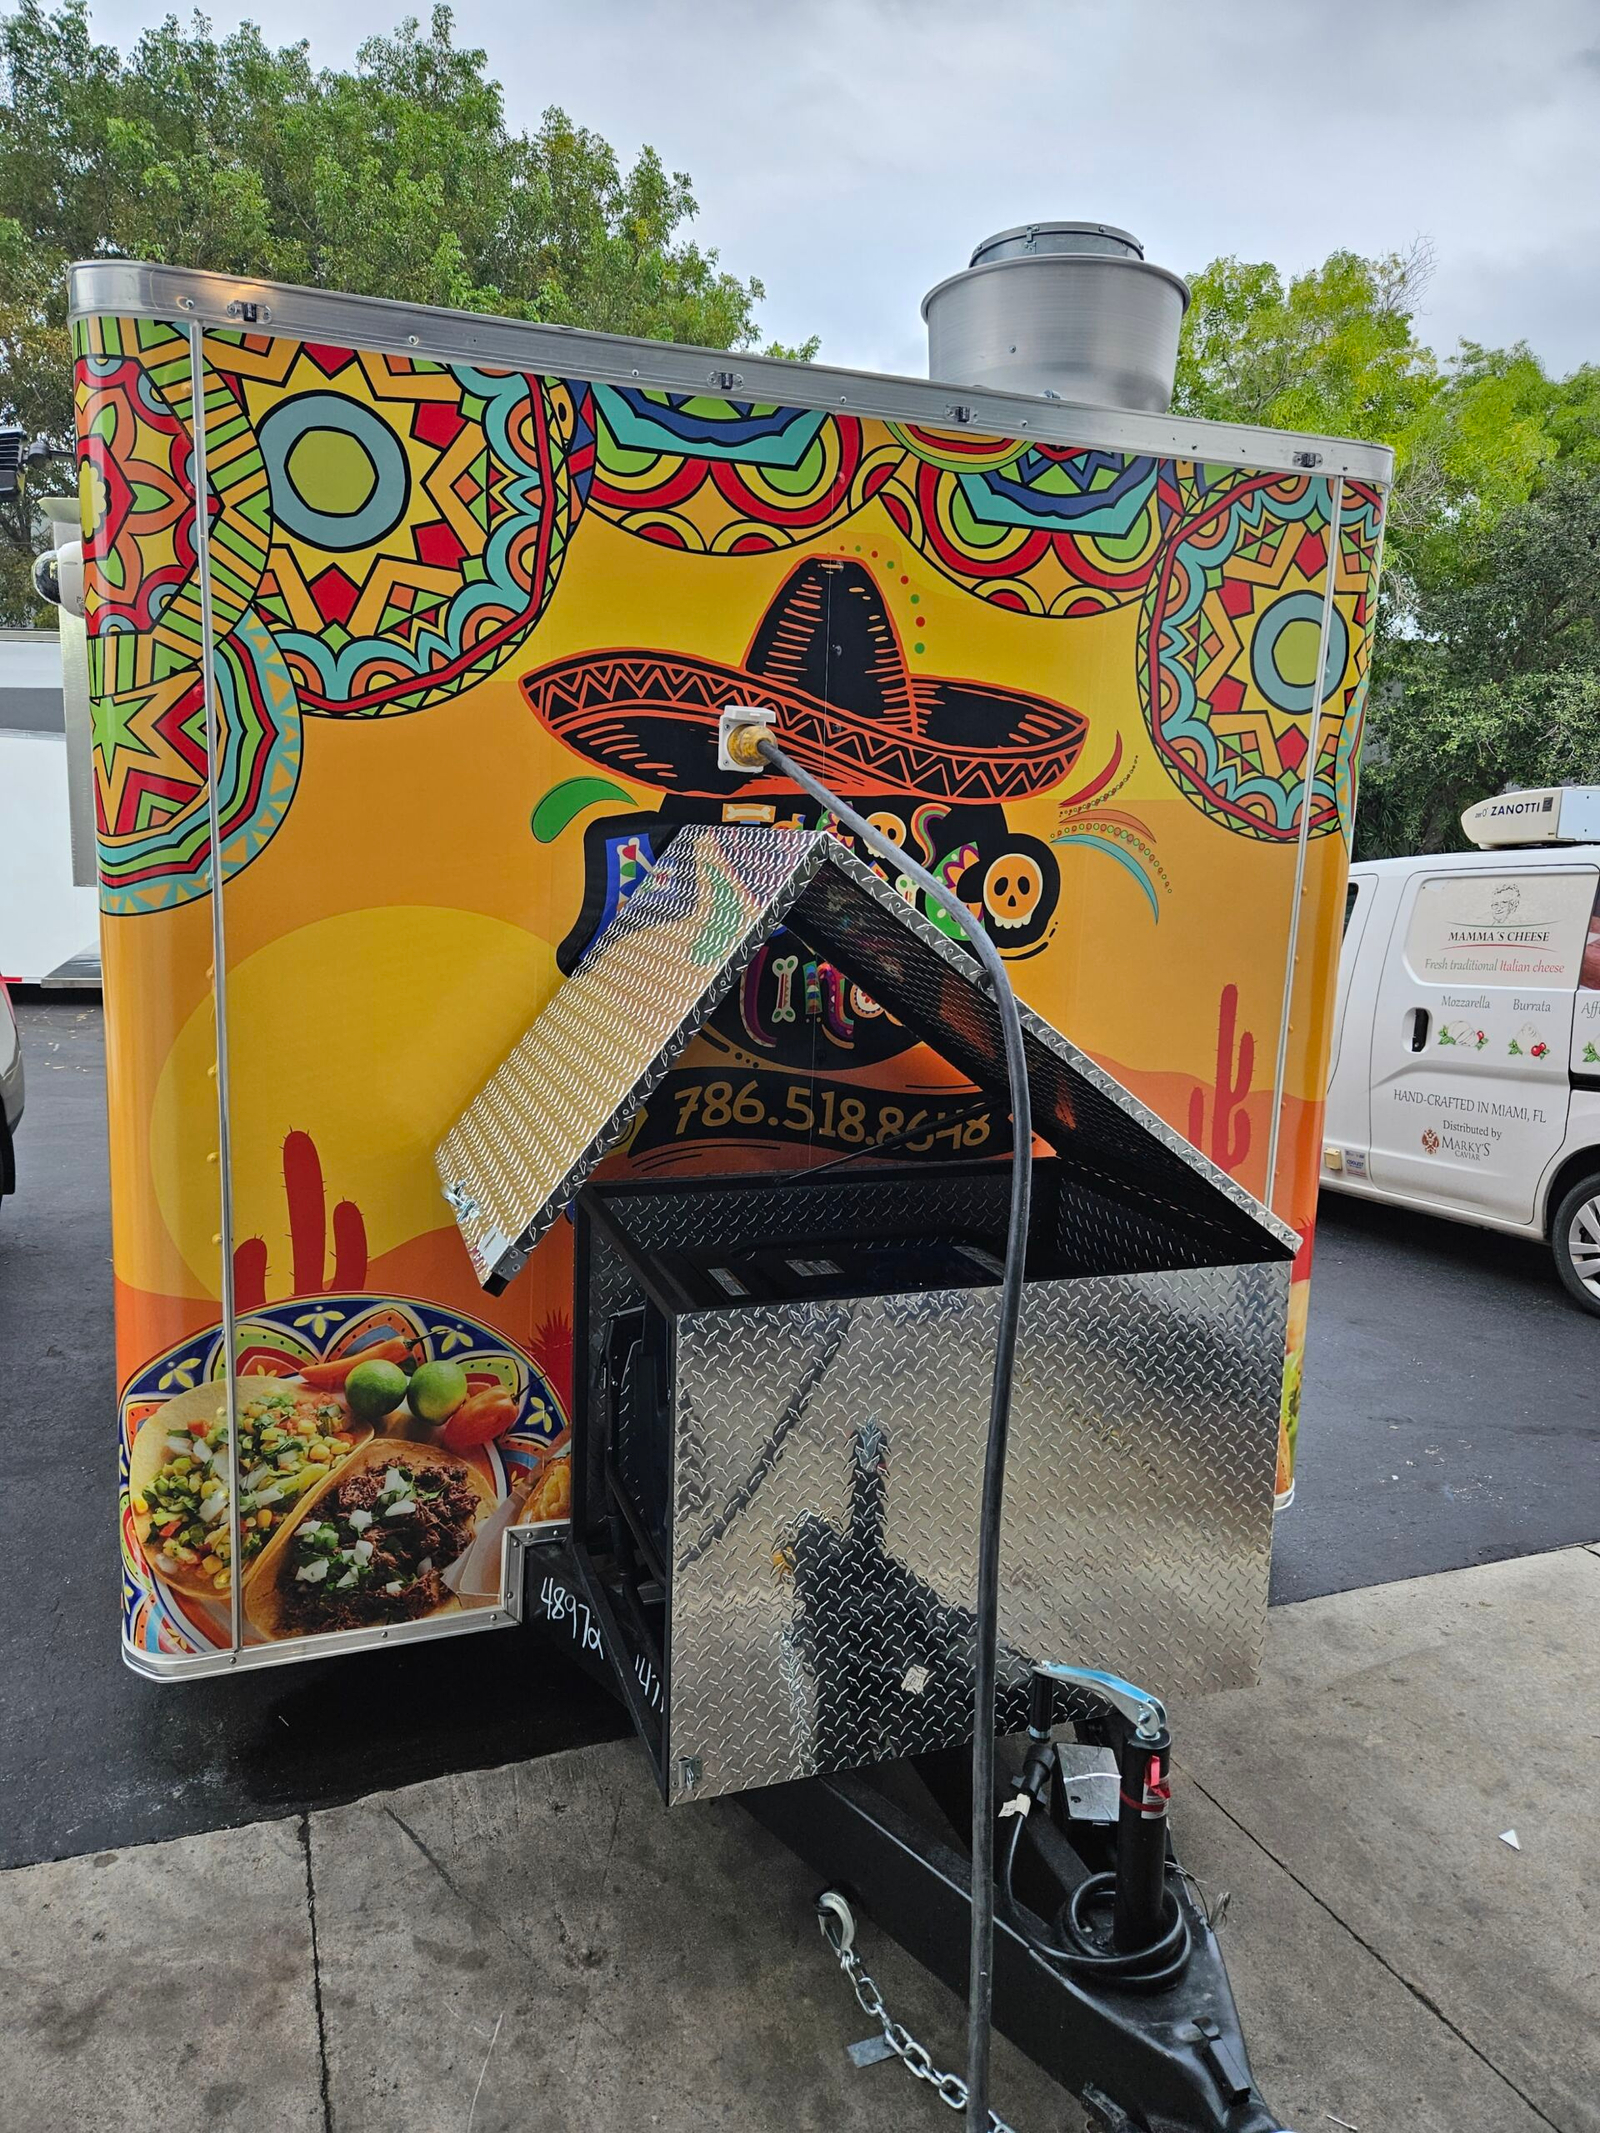 20231025 171922 scaled - Tacos Mexico Lindo Food Trailer